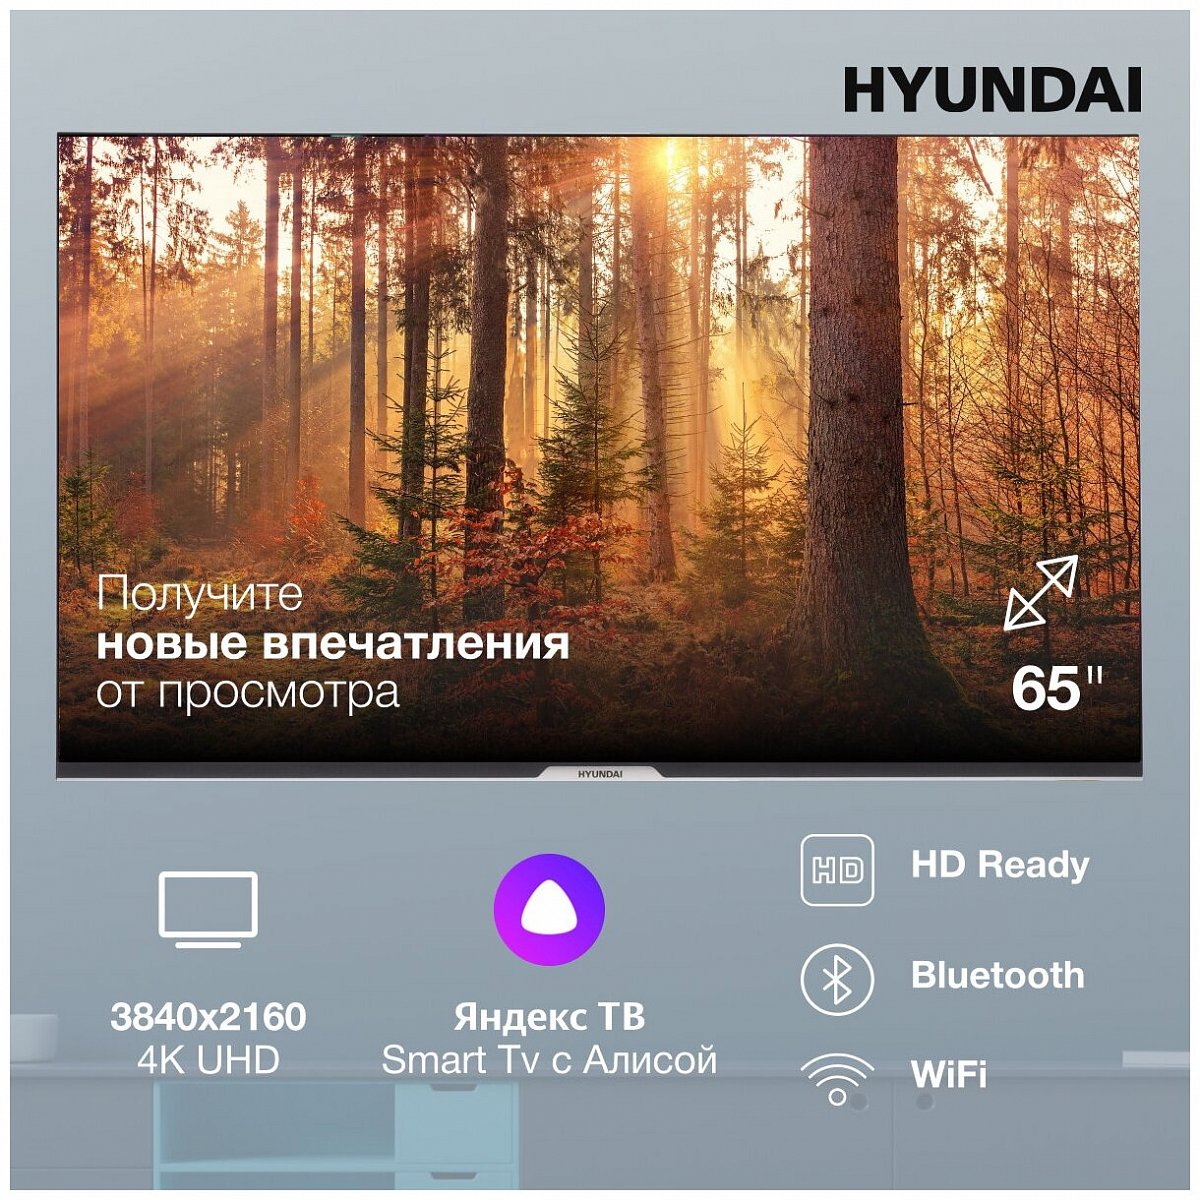 Телевизор hyundai led65bu7003